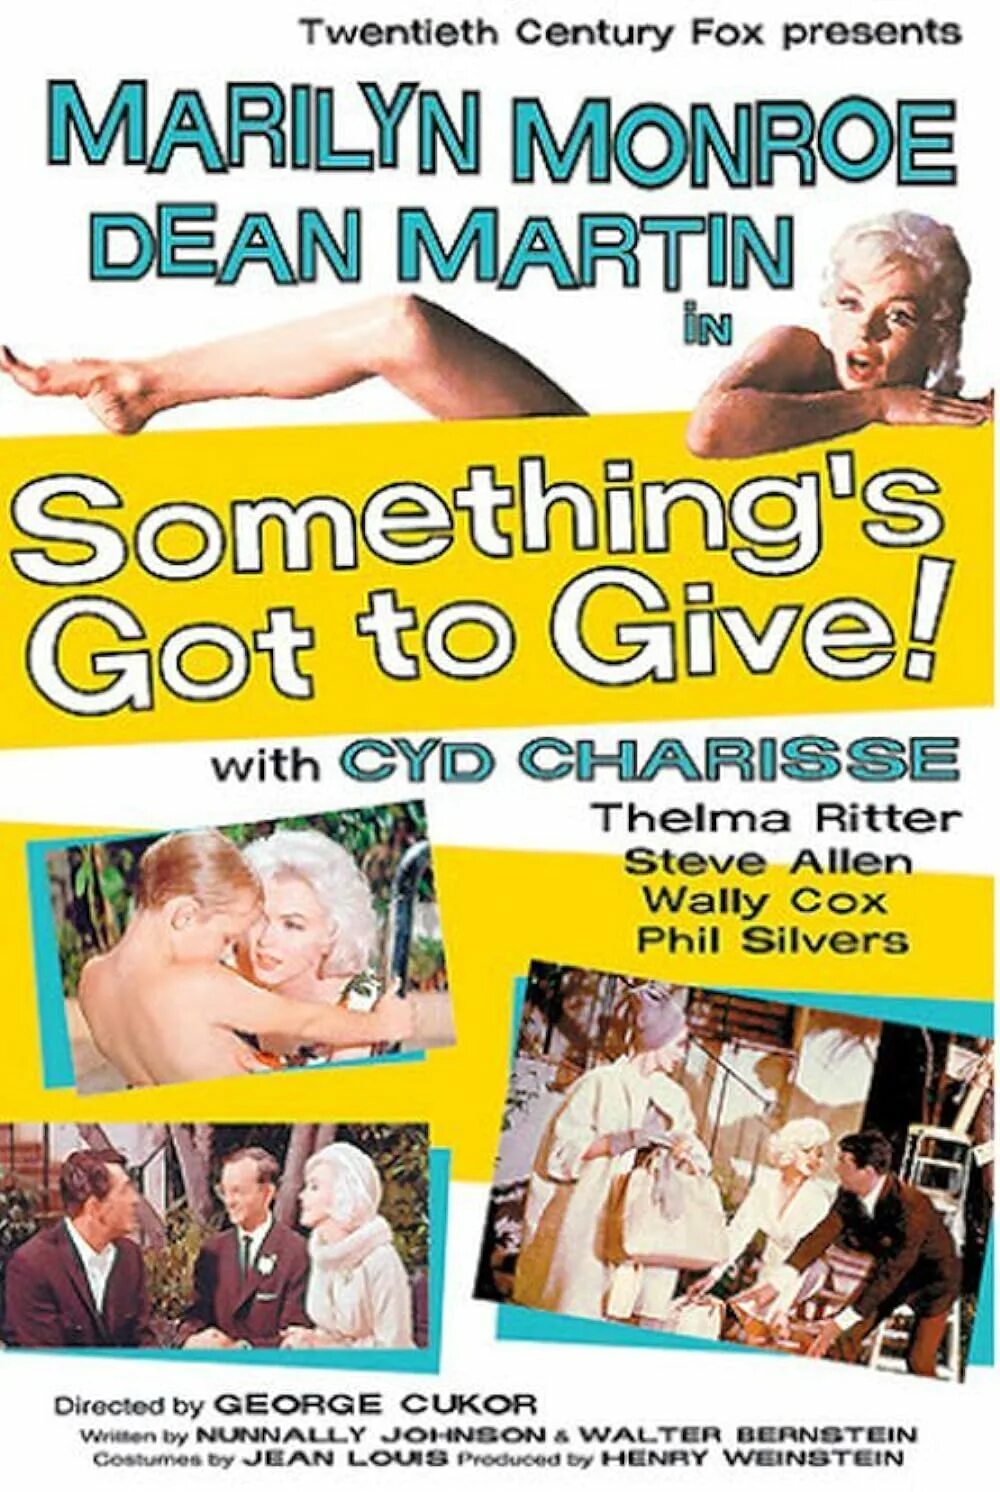 Something got to give. Something's got to give 1962. 1962 Что-то должно случиться. Marilyn Monroe something's got to give.